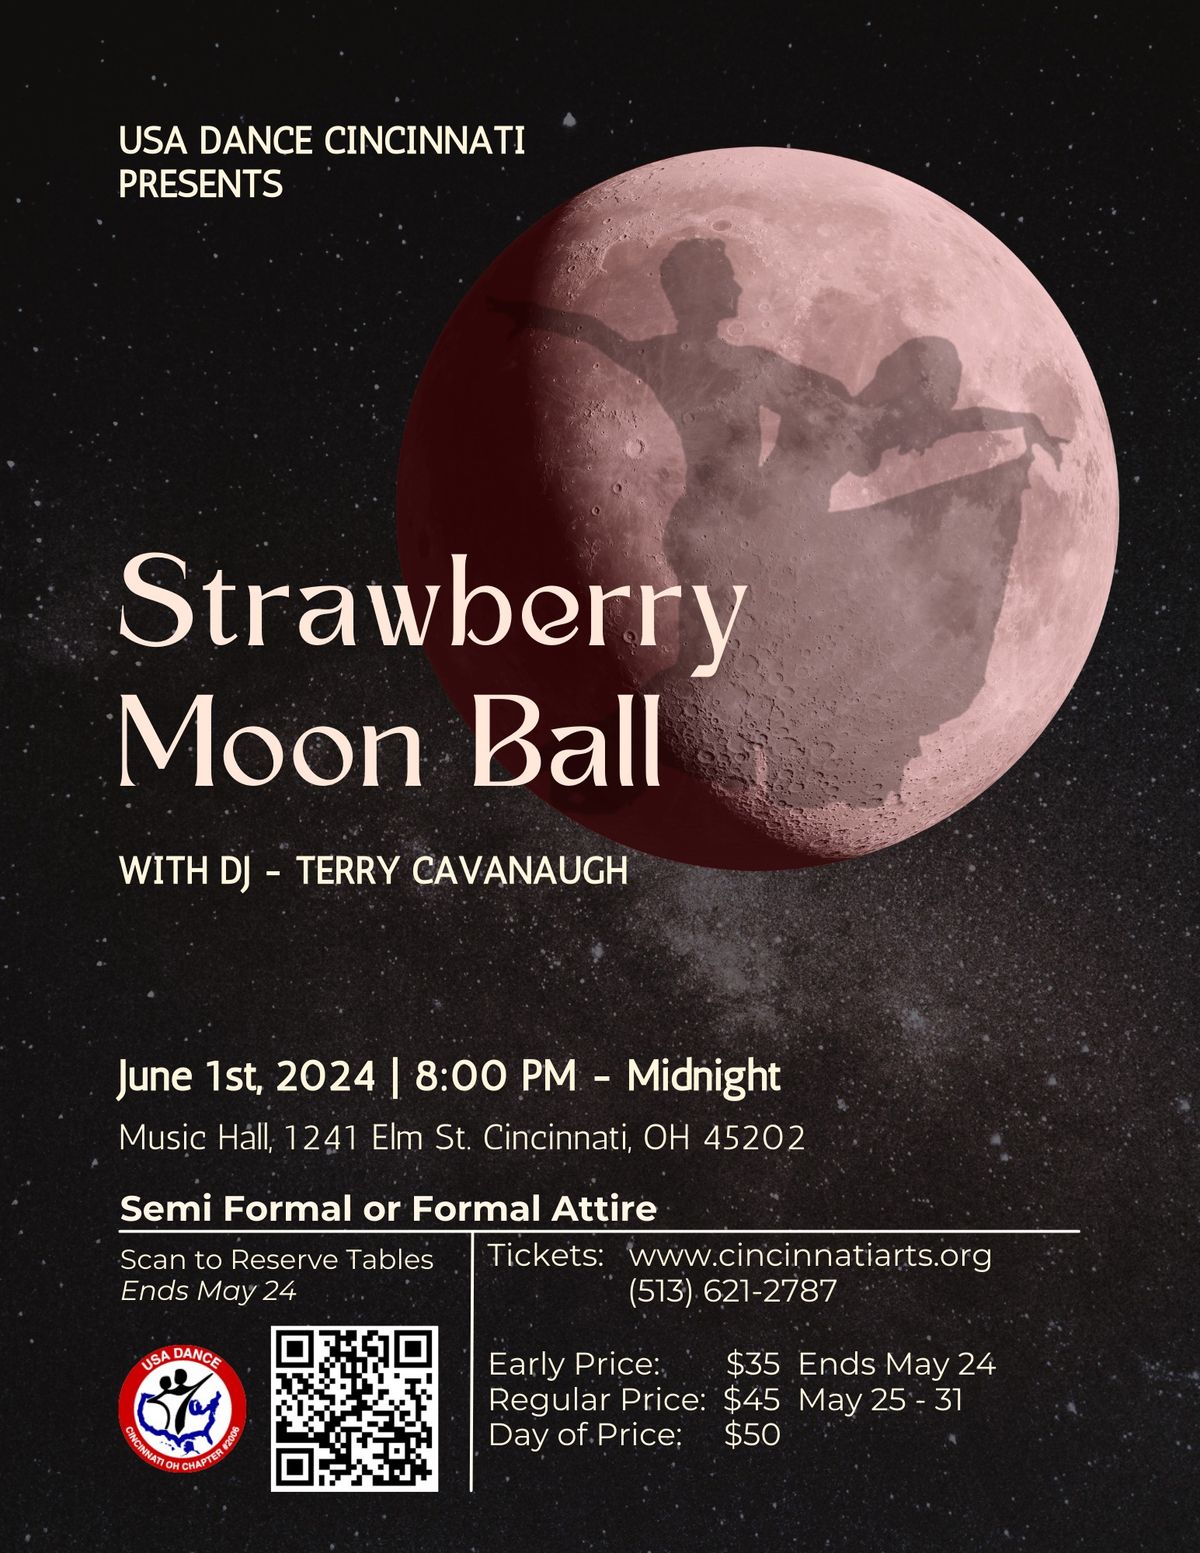 USADance Cincinnati Strawberry Moon Ball